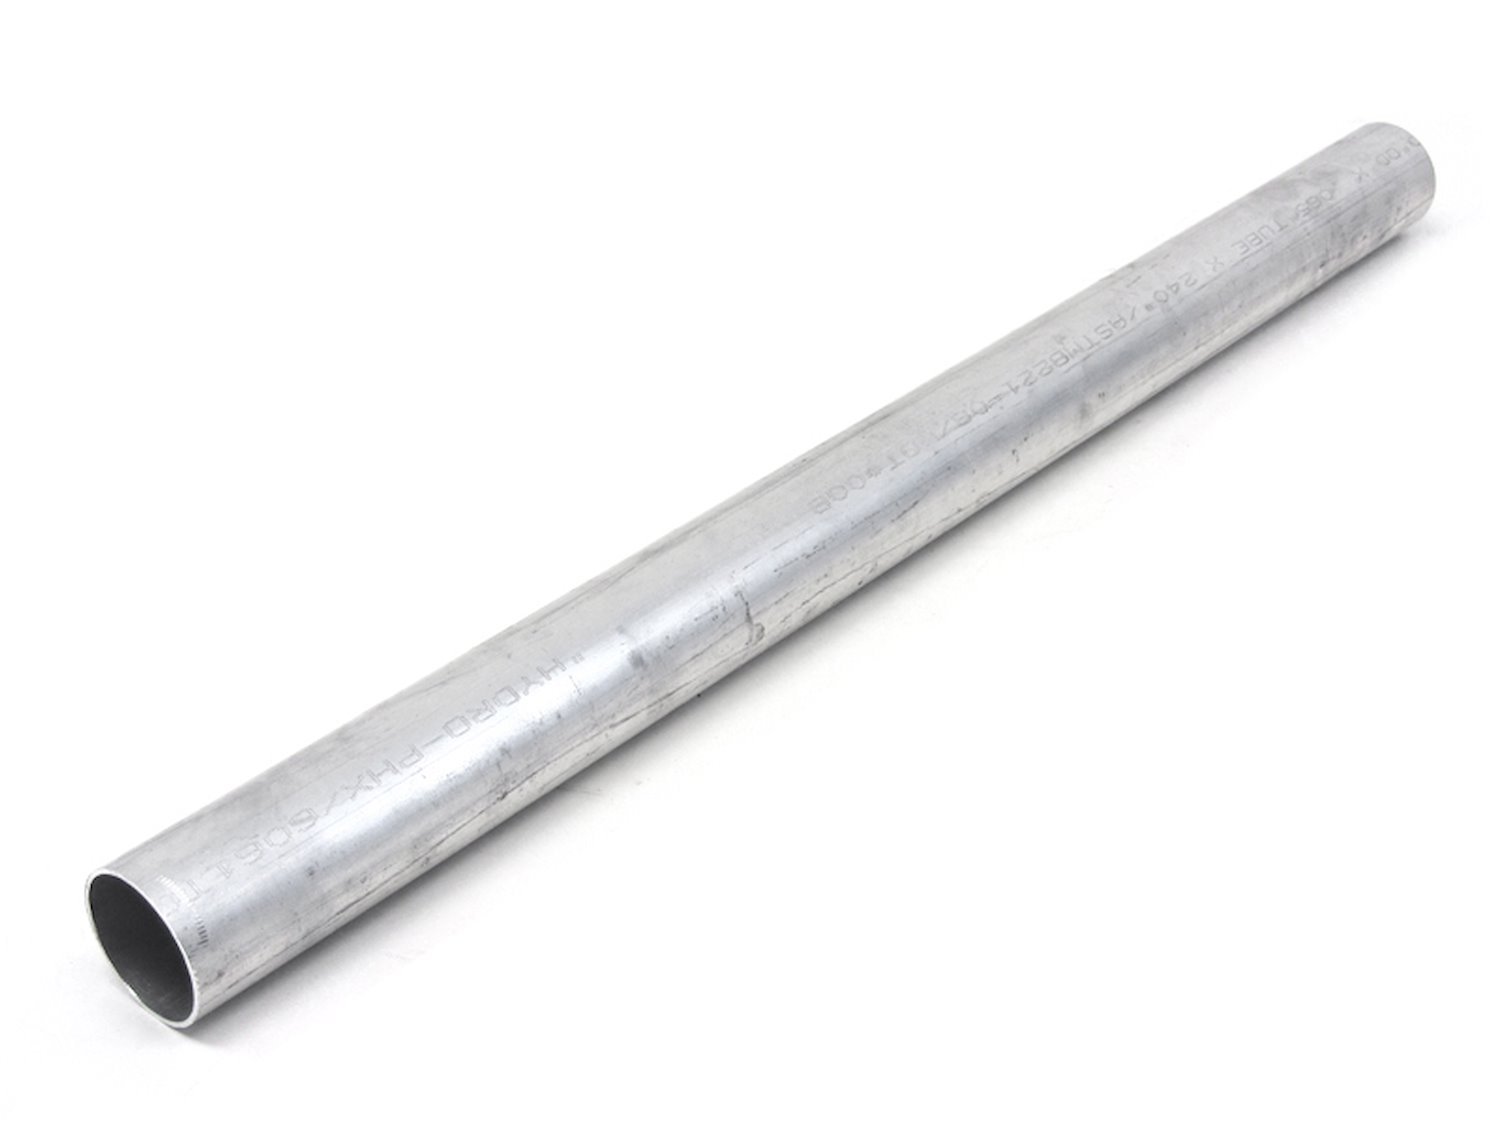 AST-050 Aluminum Tubing, 6061 Aluminum, Straight Tubing, 1/2 in. OD, Seamless, Raw Finish, 1 ft. Long